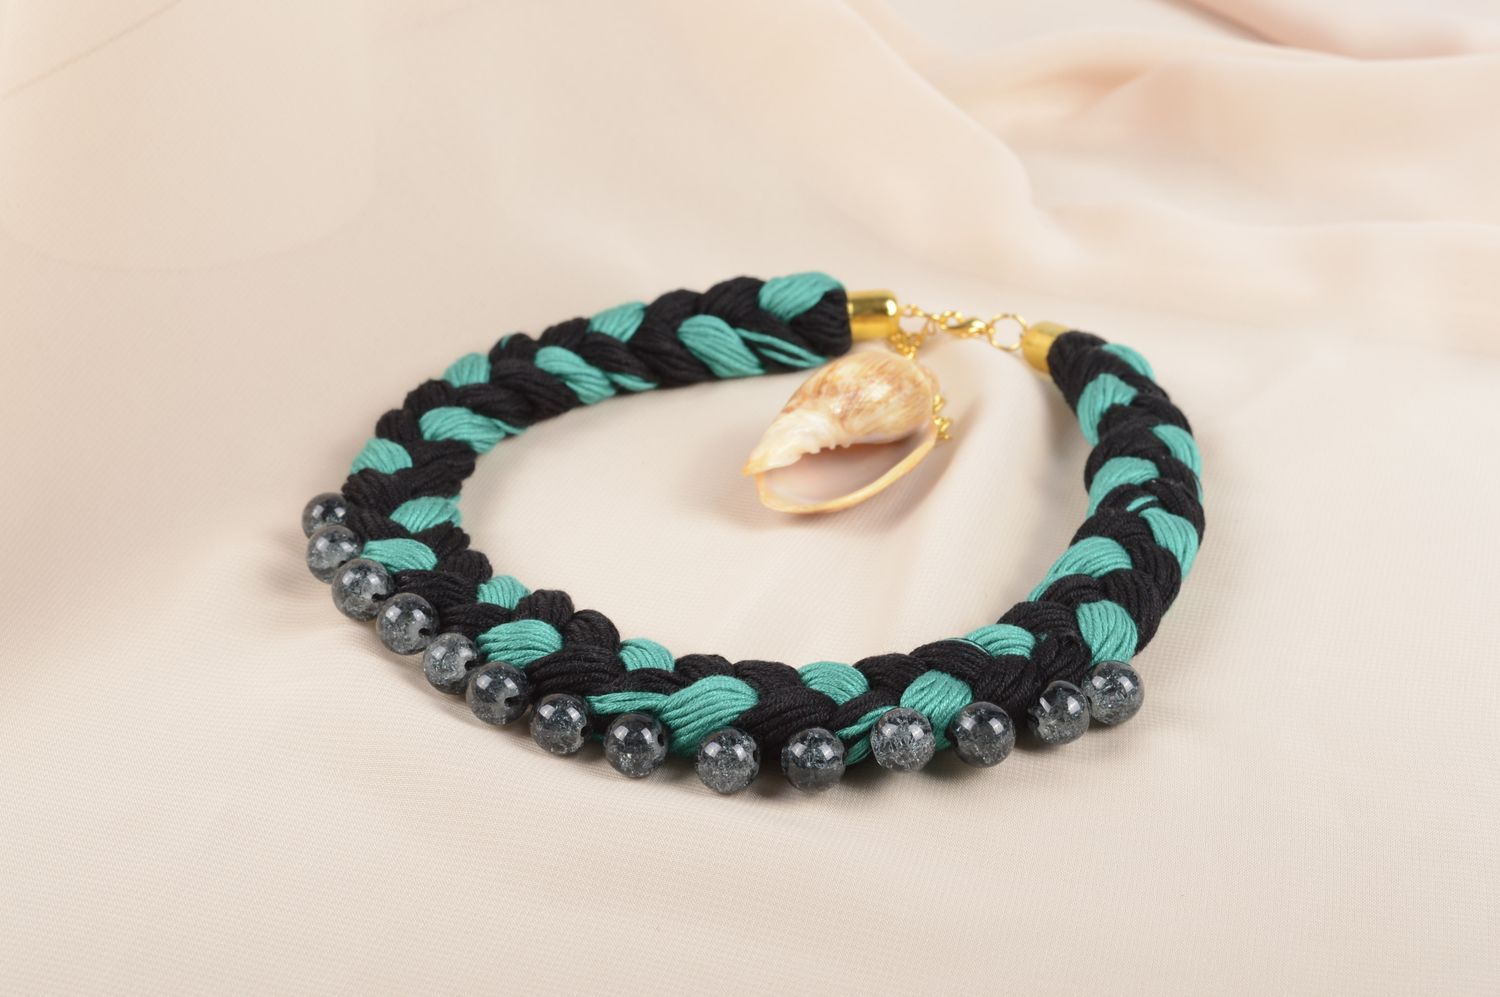 Handmade fabric necklace with beads necklace stylish jewelry designer accessory photo 5